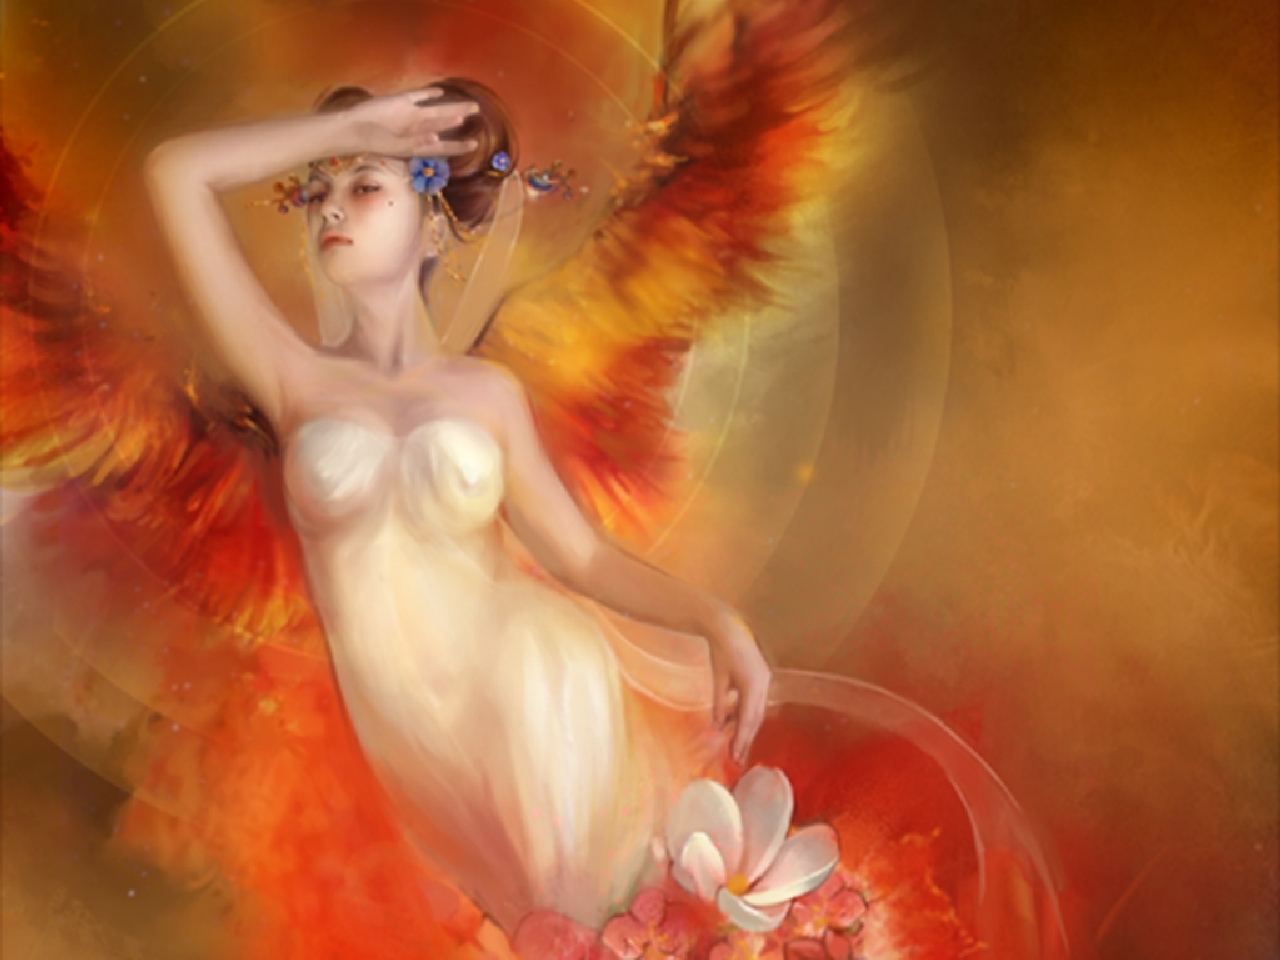 Free download wallpaper Fantasy, Angel on your PC desktop